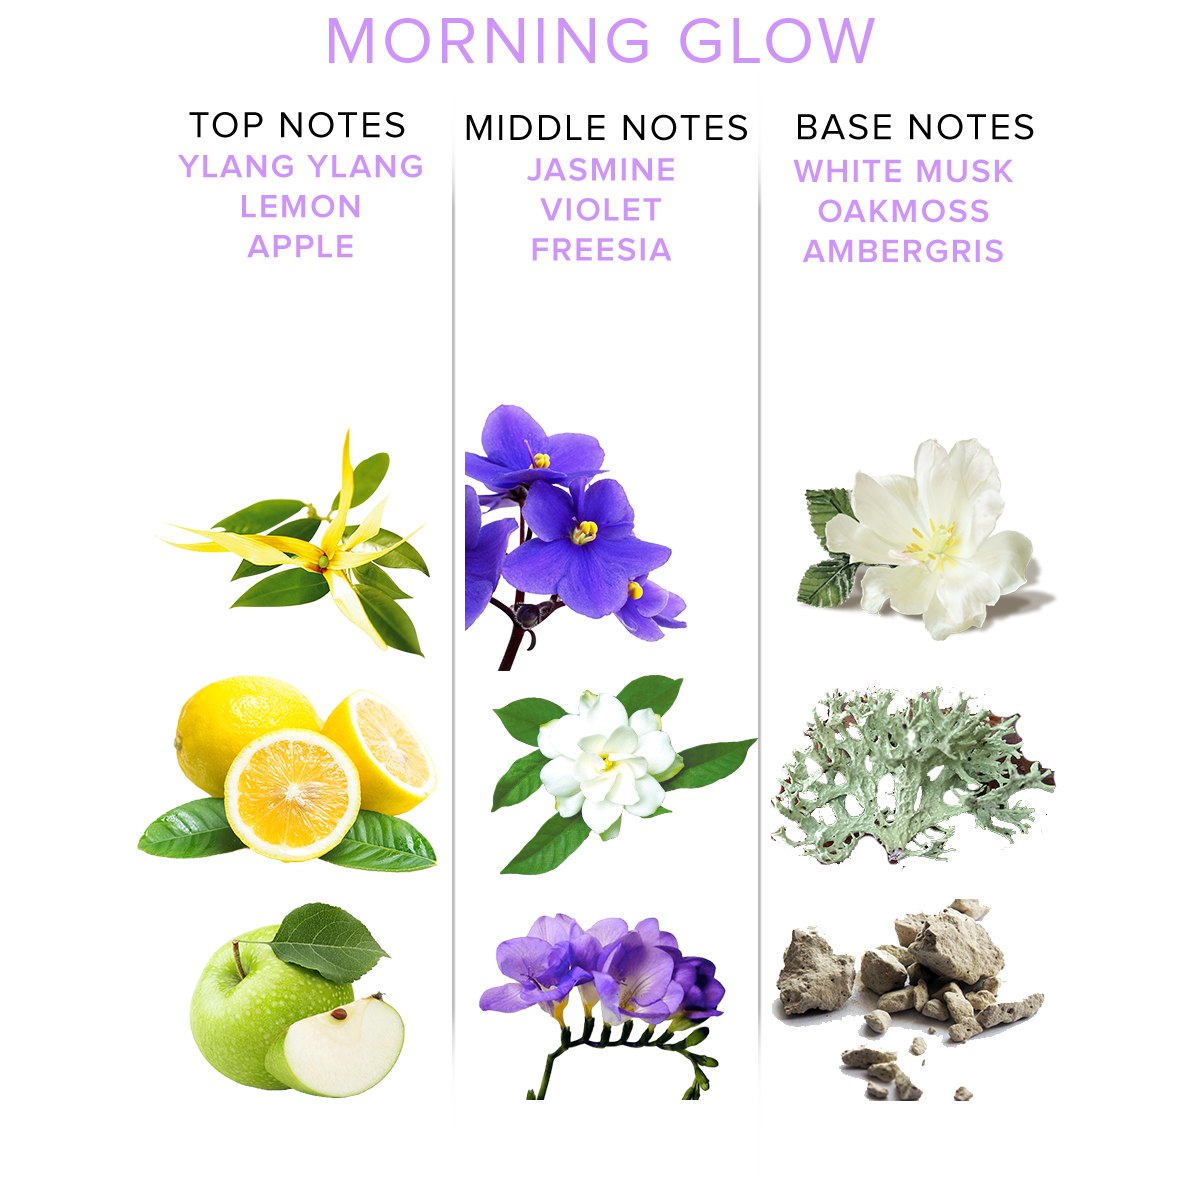 Morning Glow Pheromone Parfum